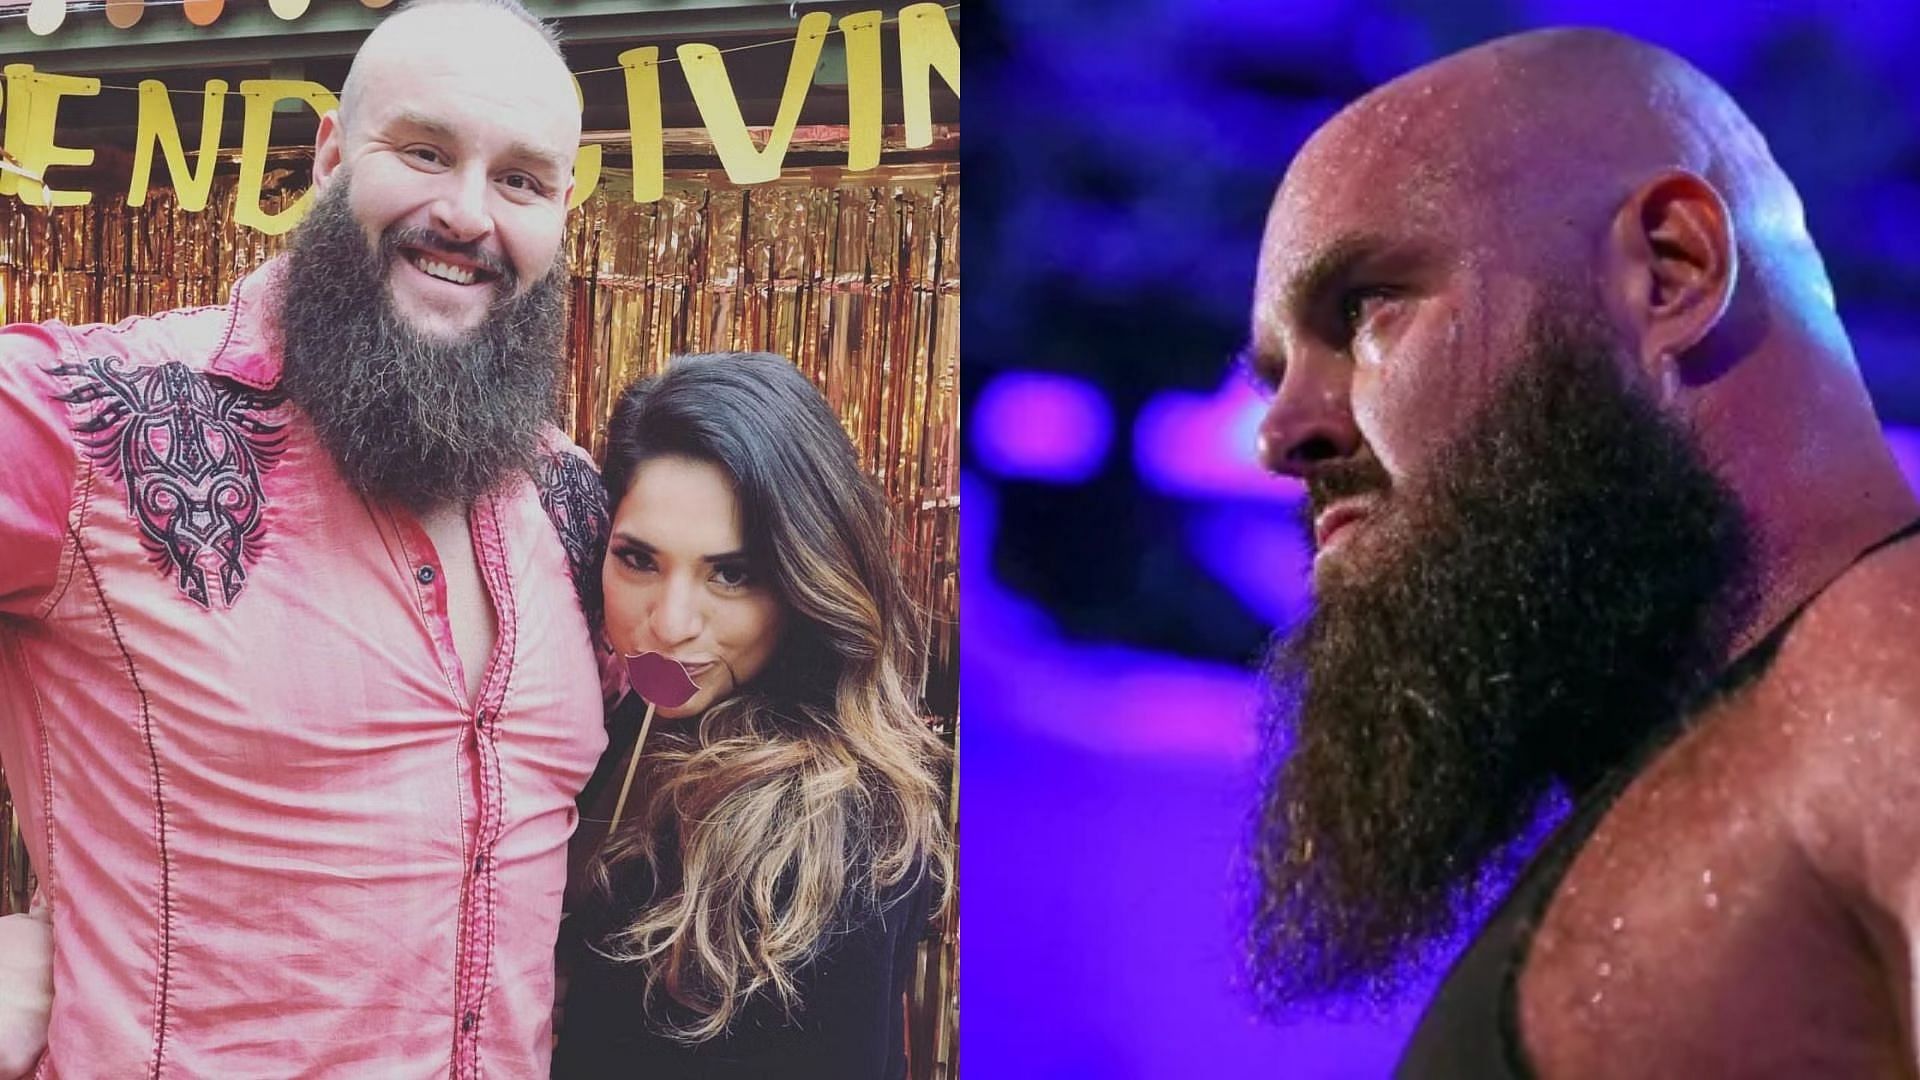 WWE Superstars Braun Strowman and Raquel Gonzalez are in a relationship